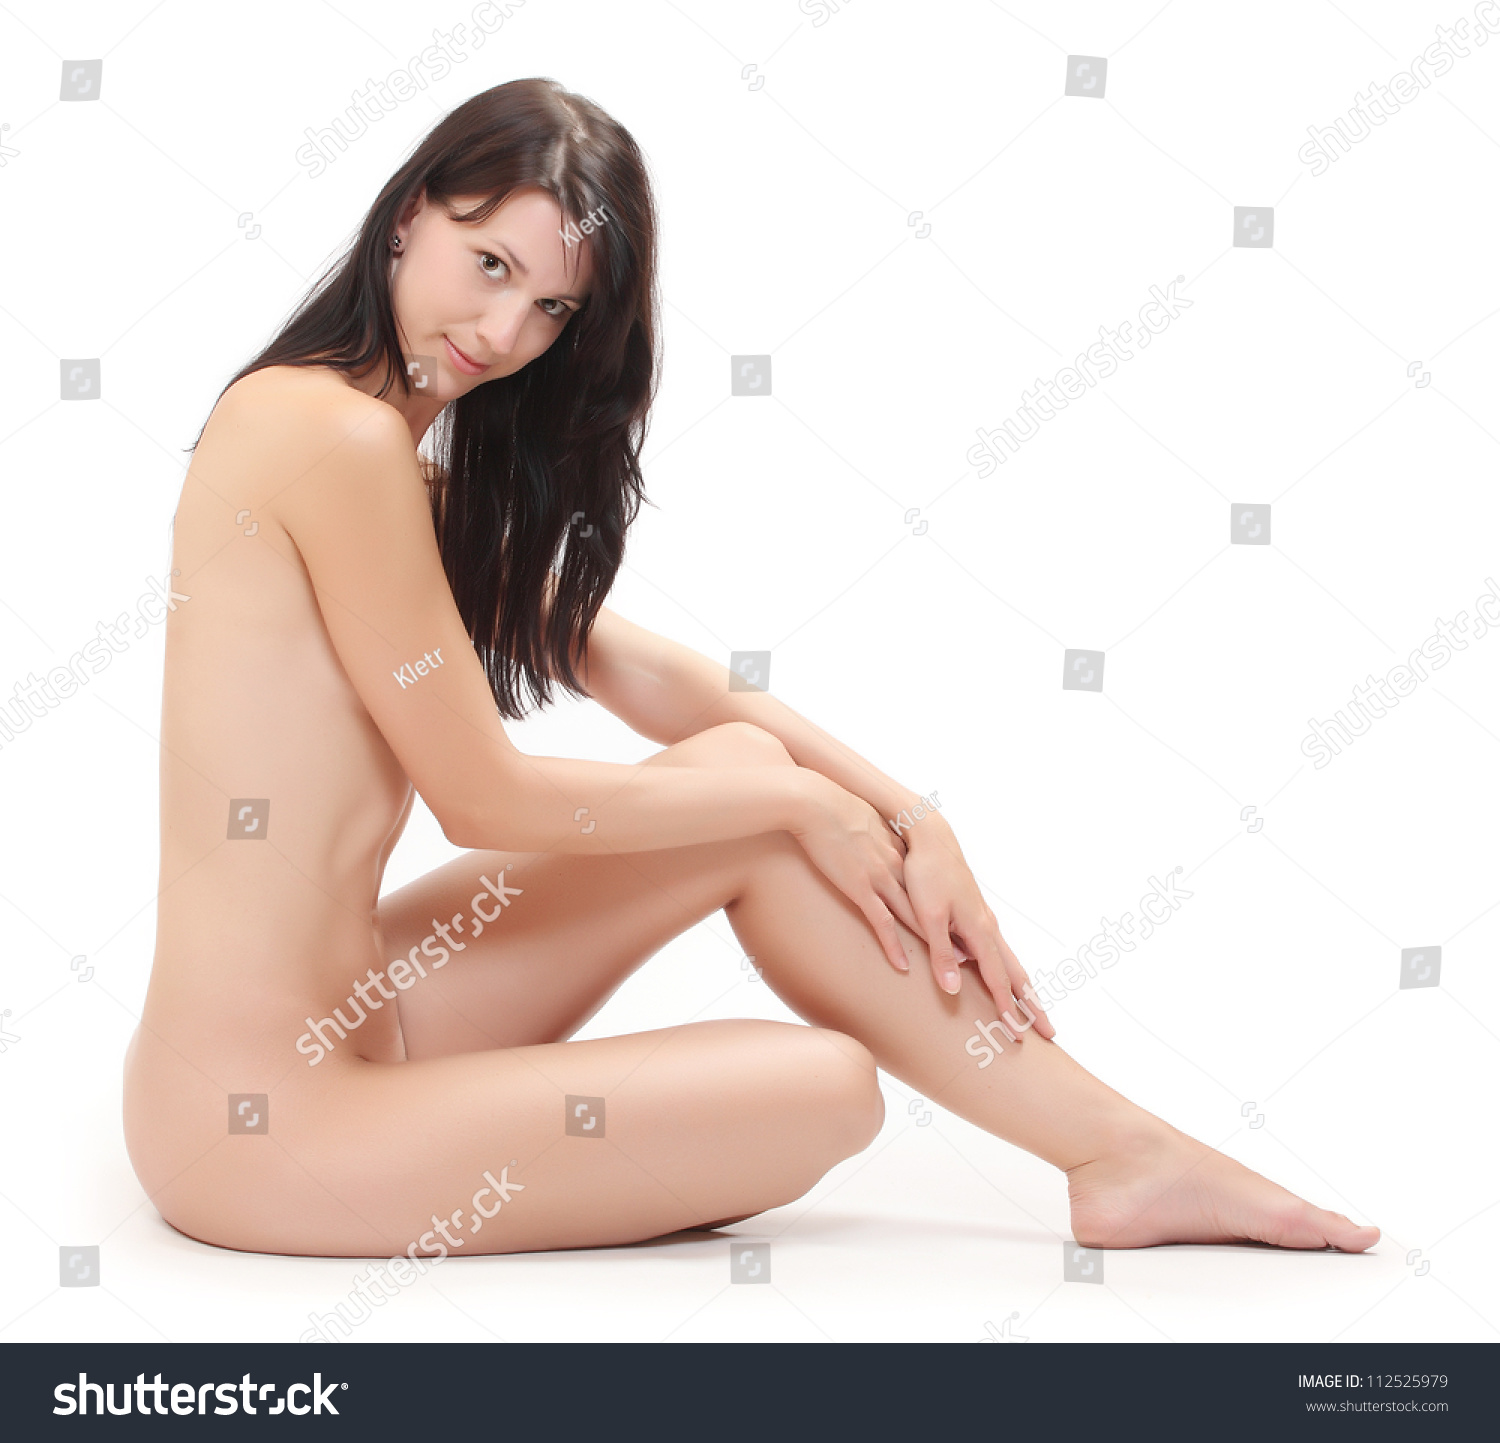 Healthy Nude Women 55